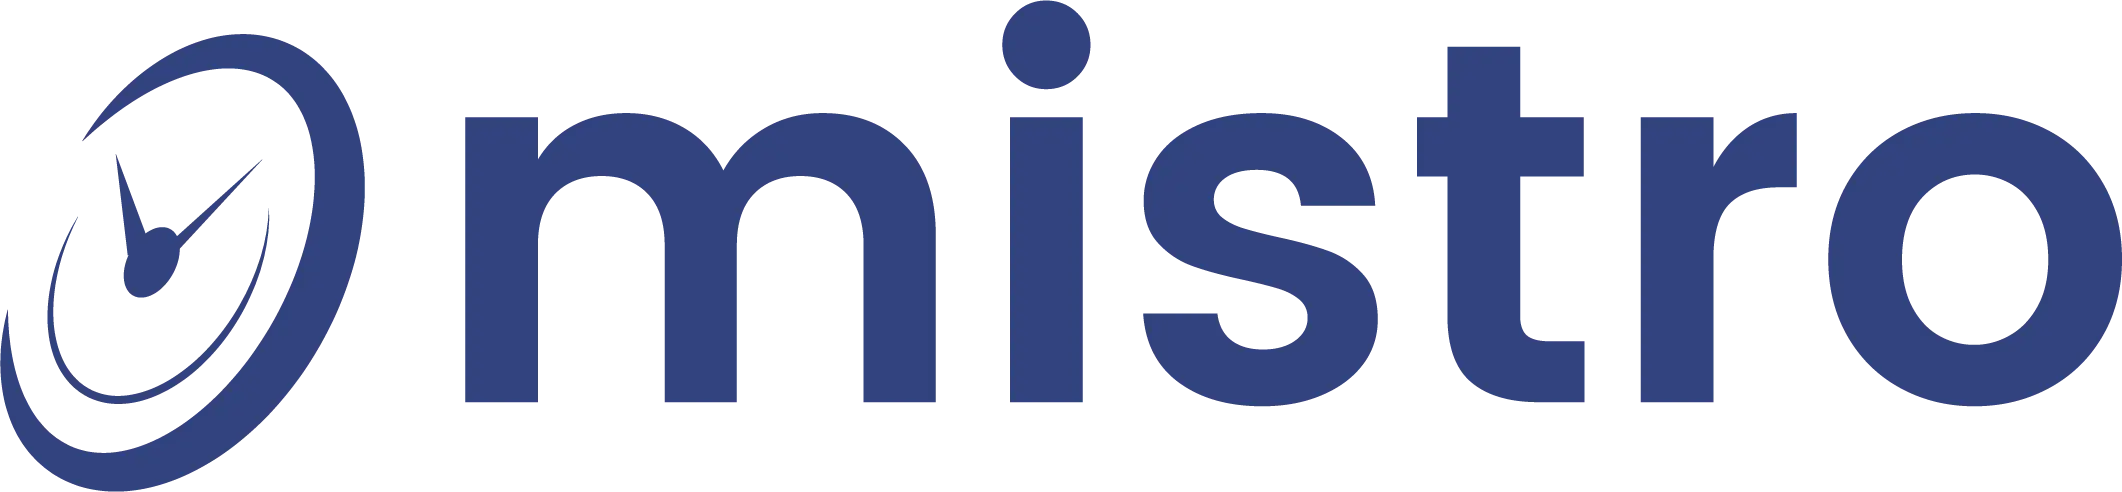 mistro-logo